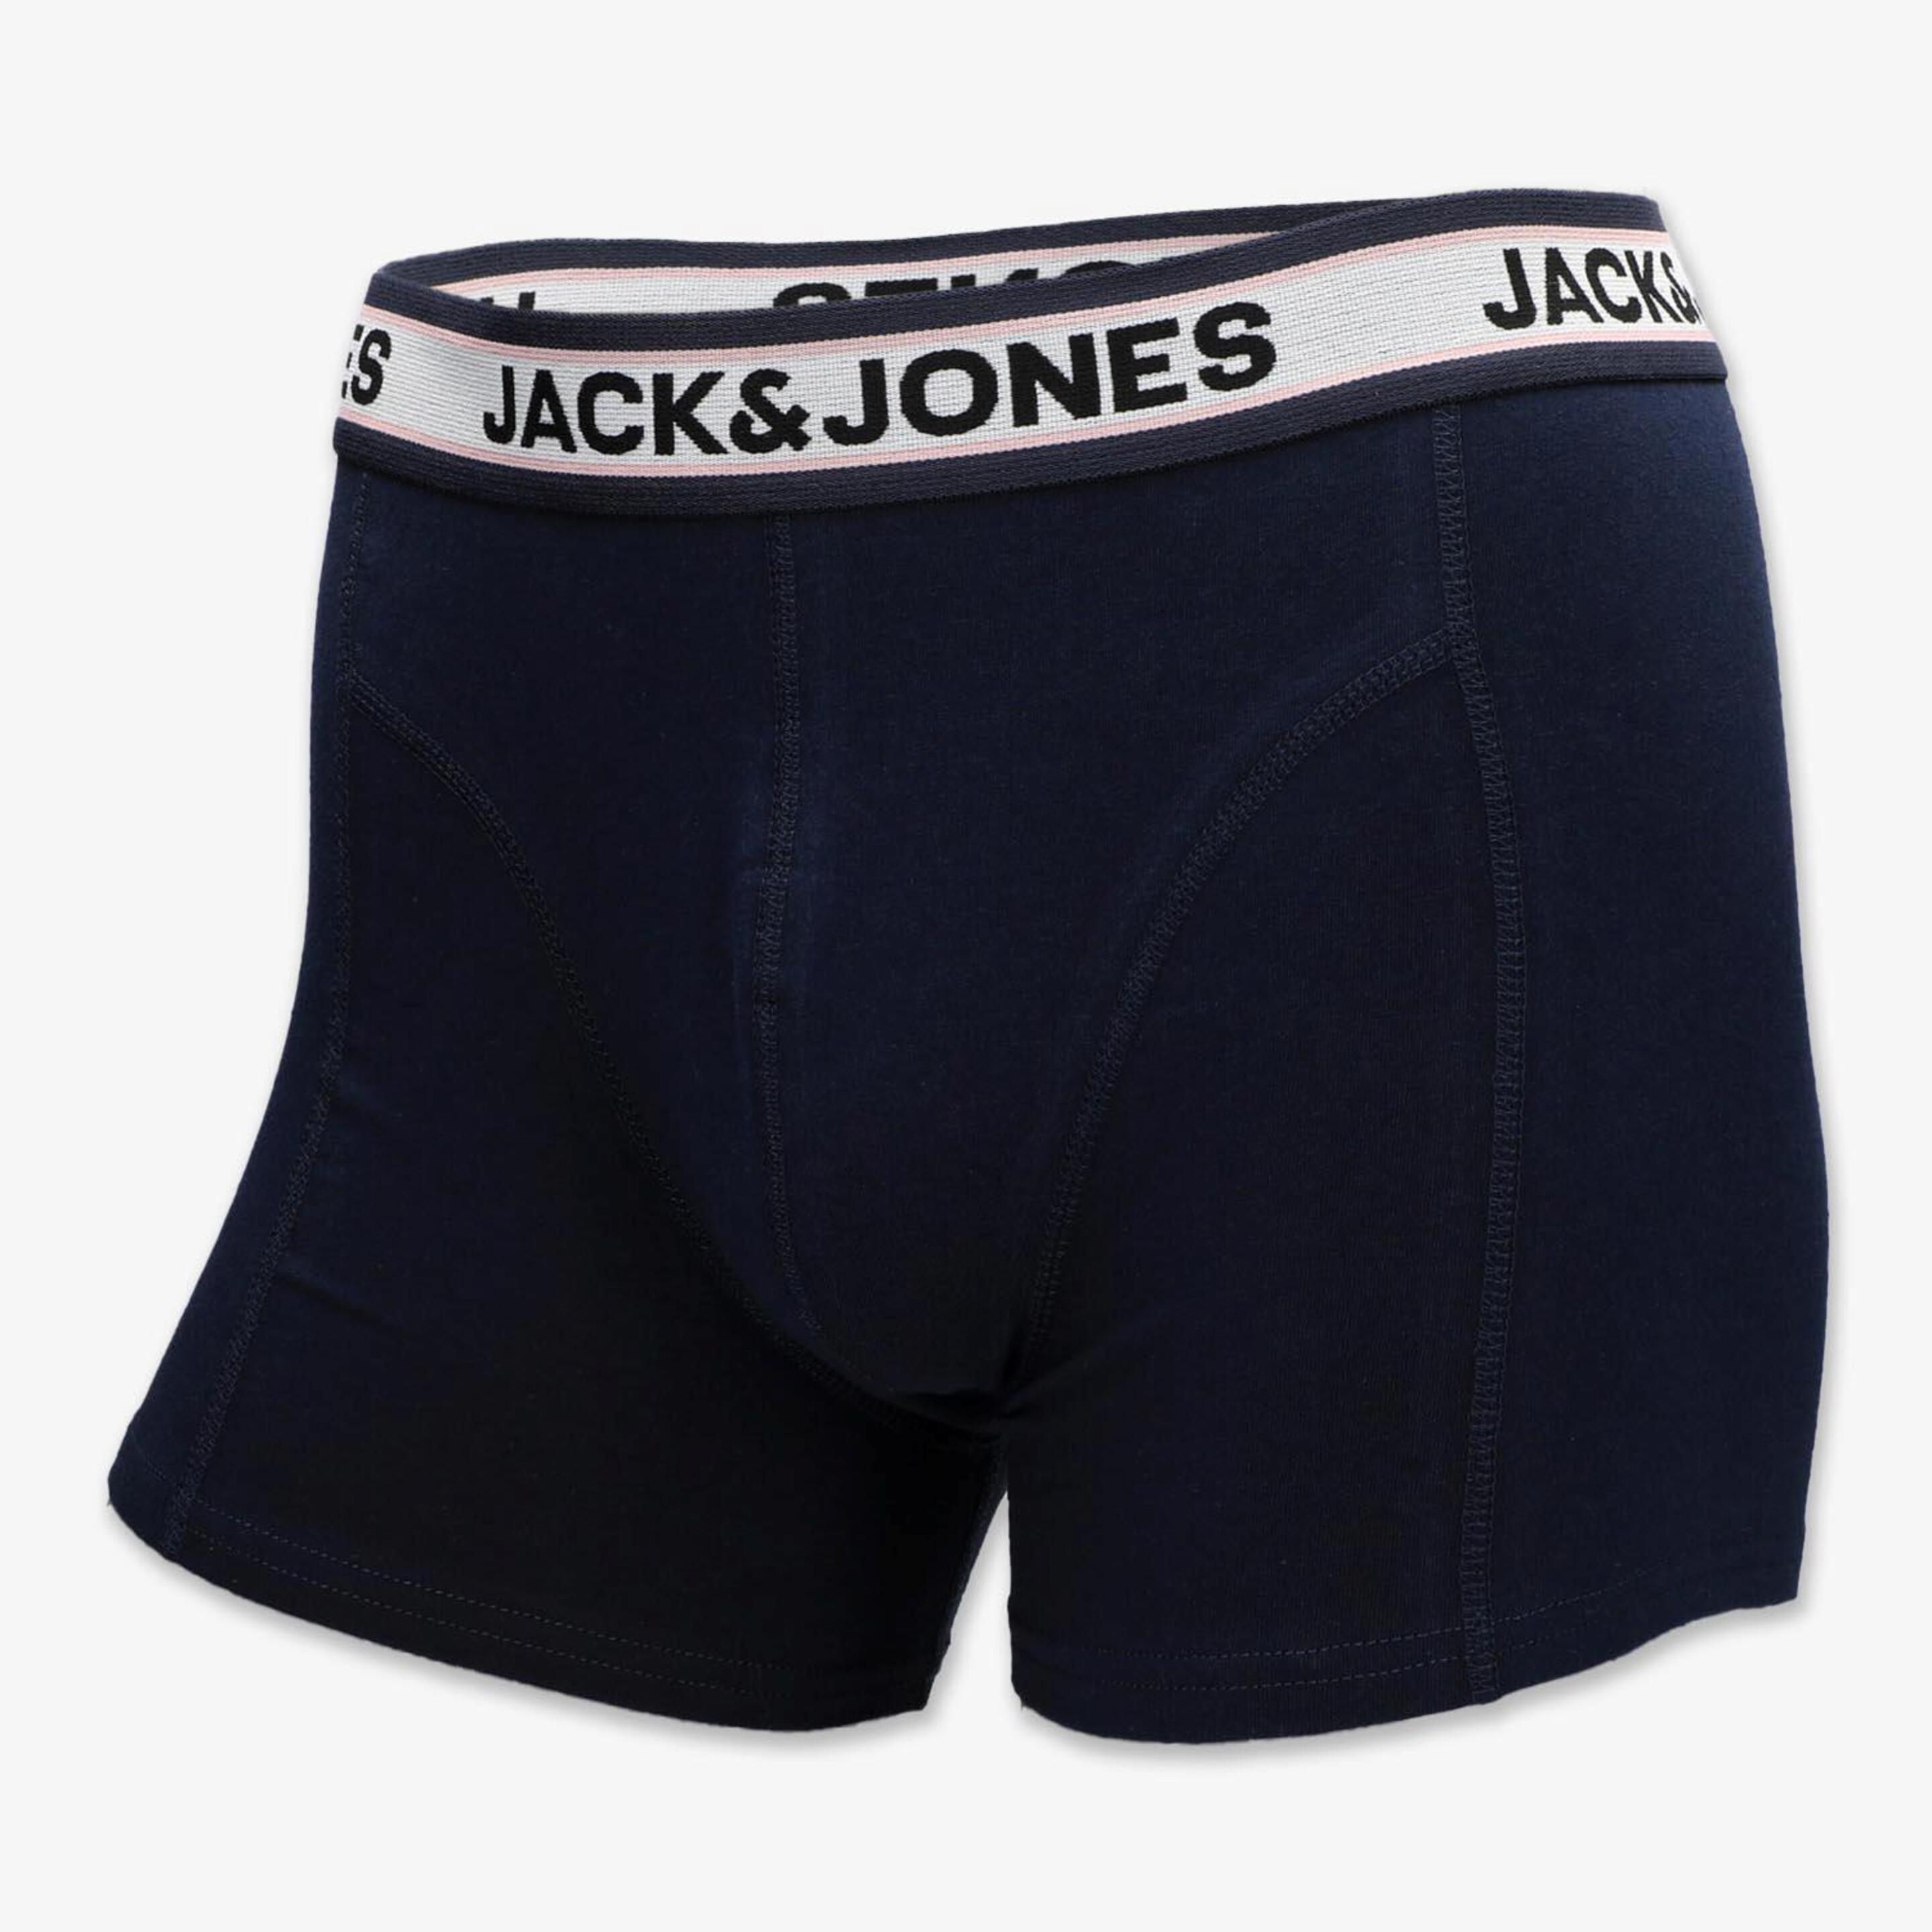 Jack & Jones Jacmarco - naranja - Boxers